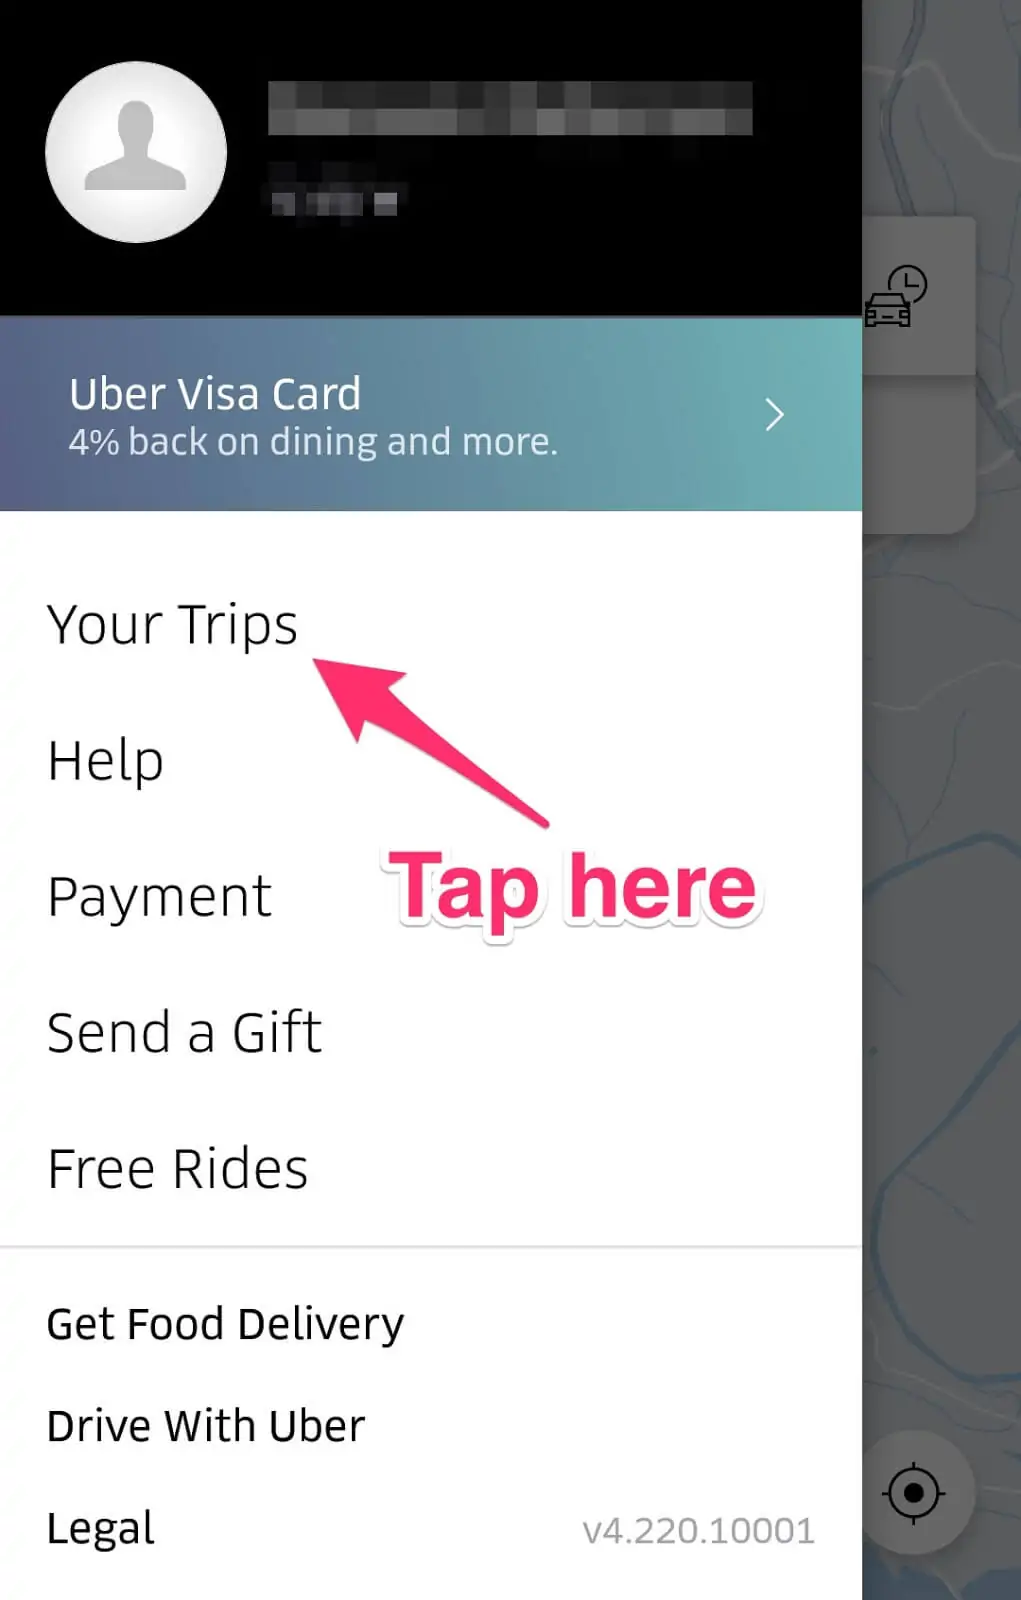 Uber receipt: Your Trips